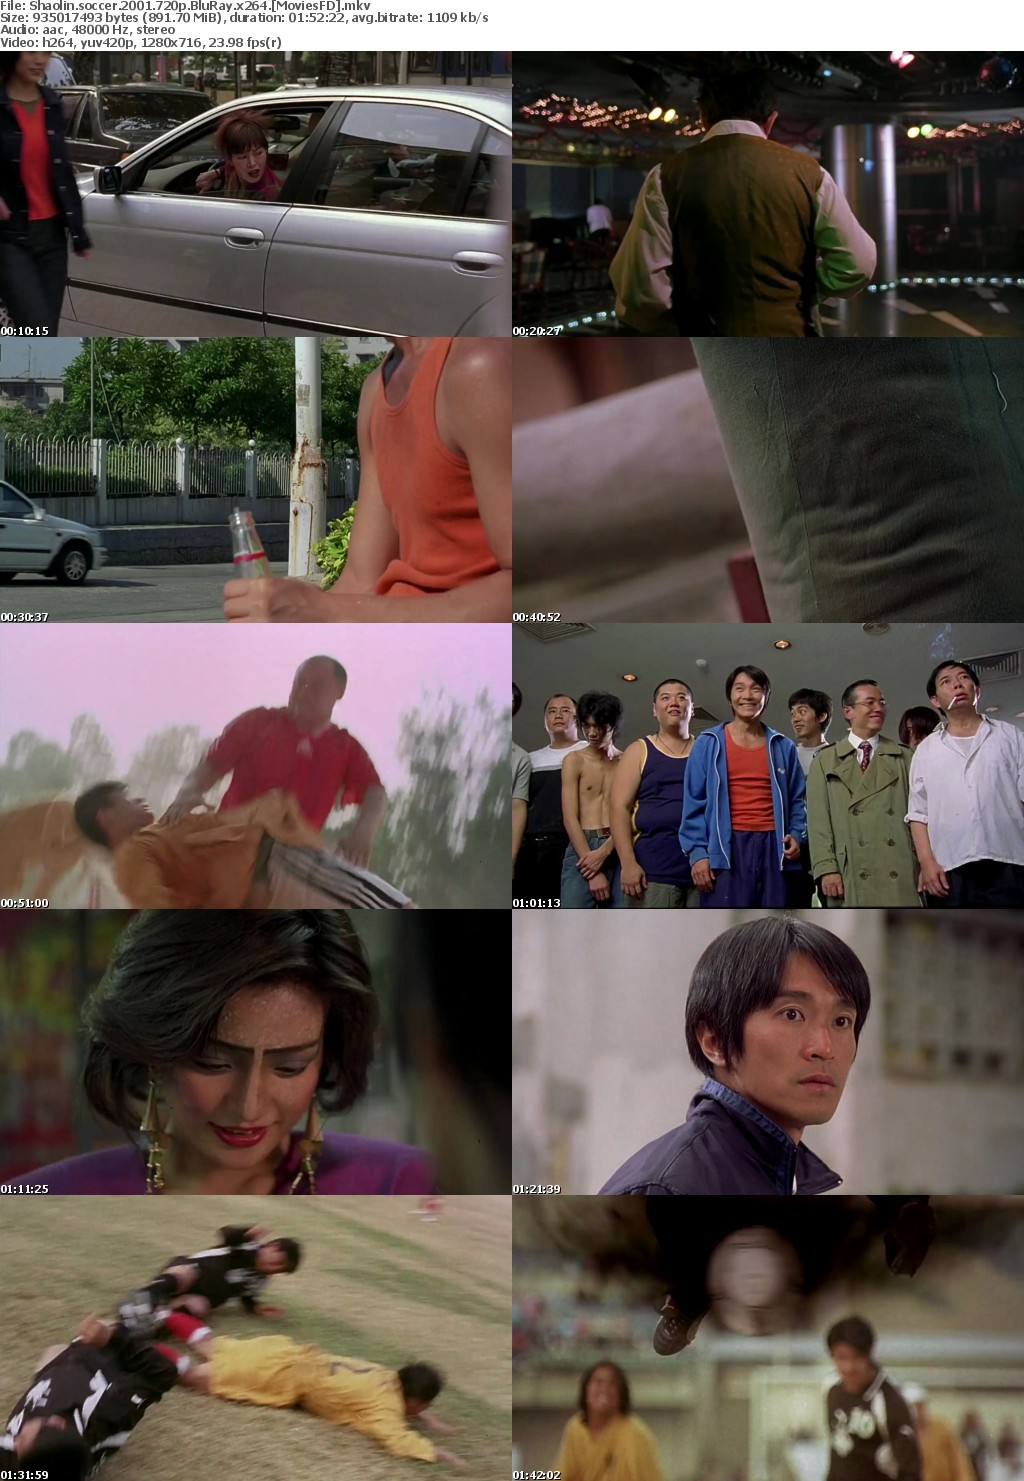 Shaolin Soccer (2001) 720P Bluray X264 Moviesfd